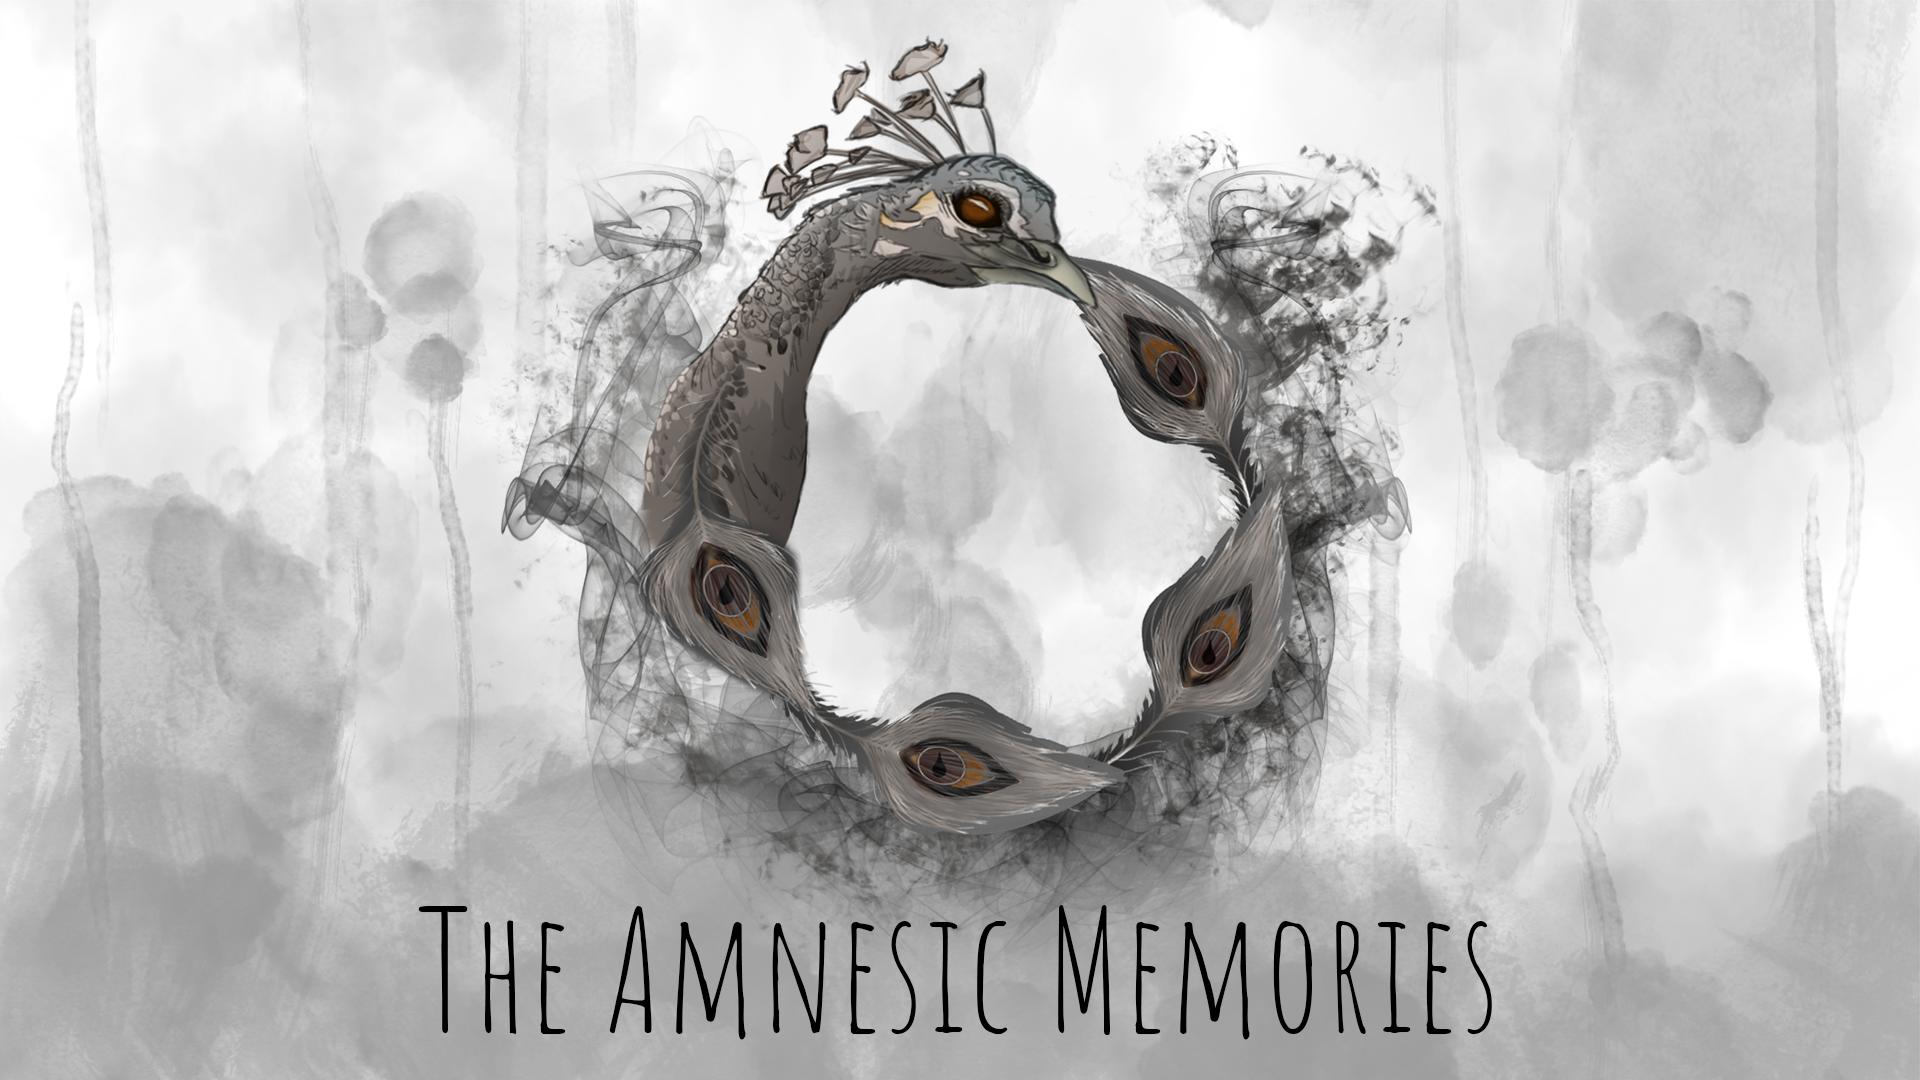 The Amnesic Memories